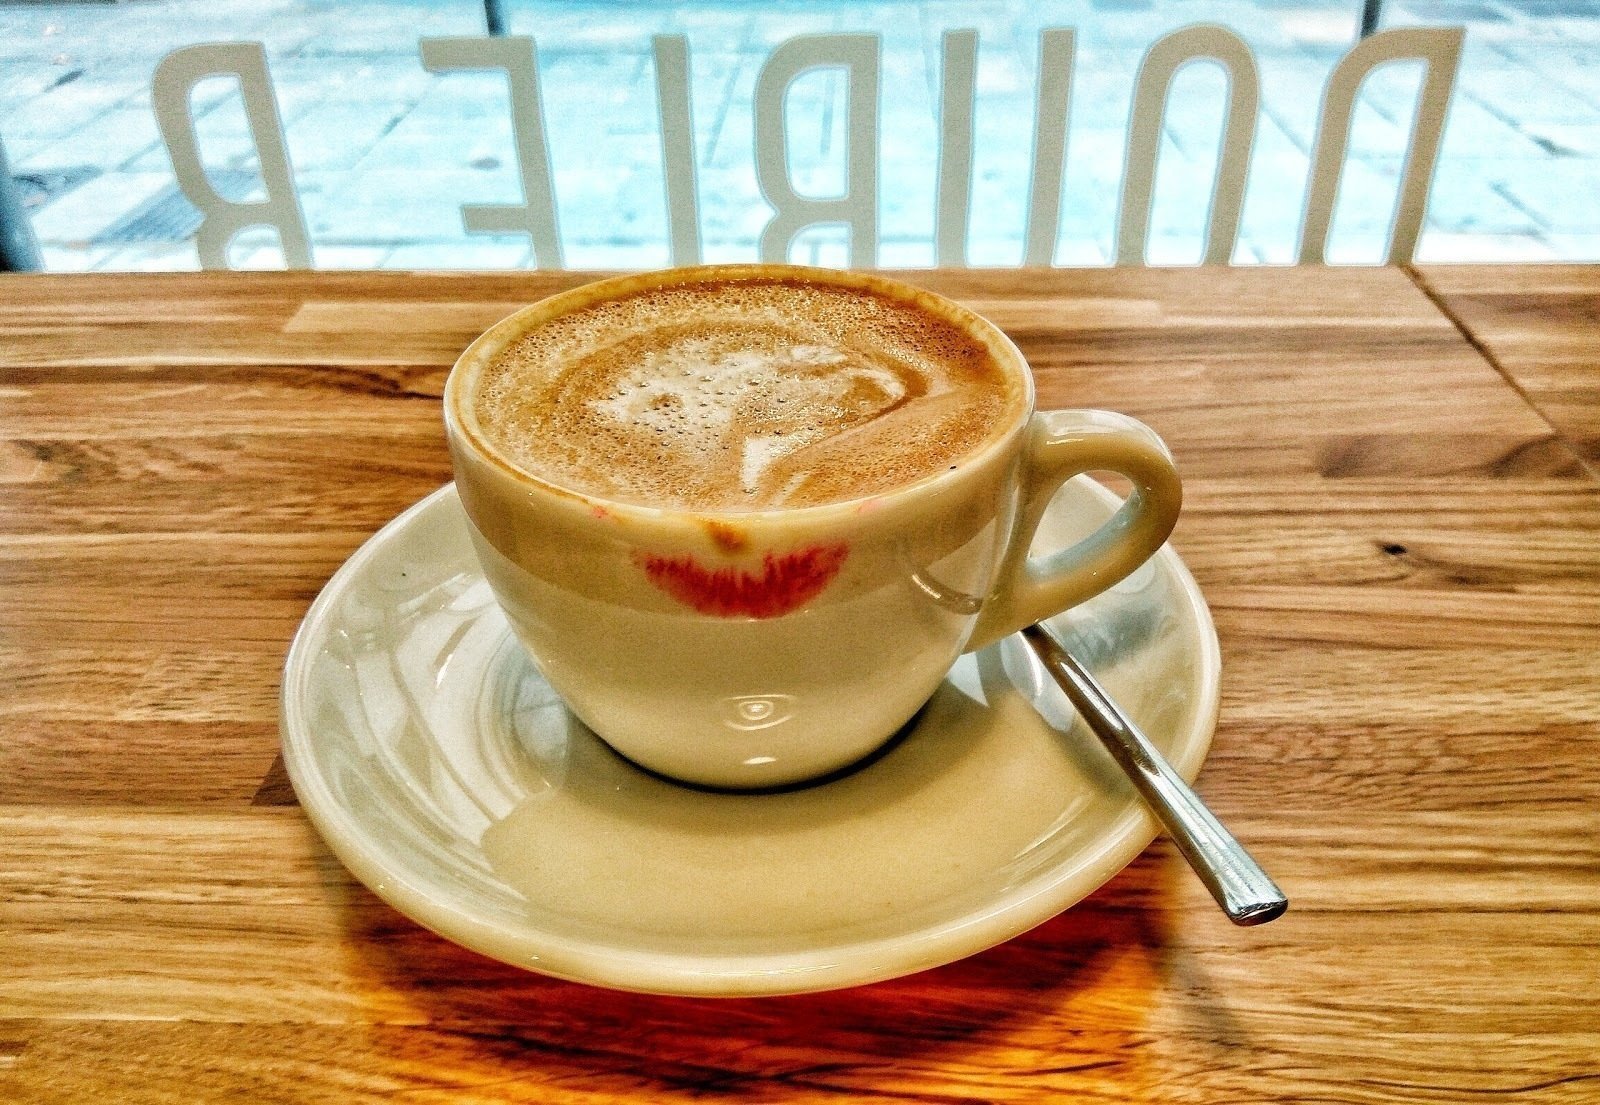 Double B Coffee Tea: A Work-Friendly Place in Barcelona